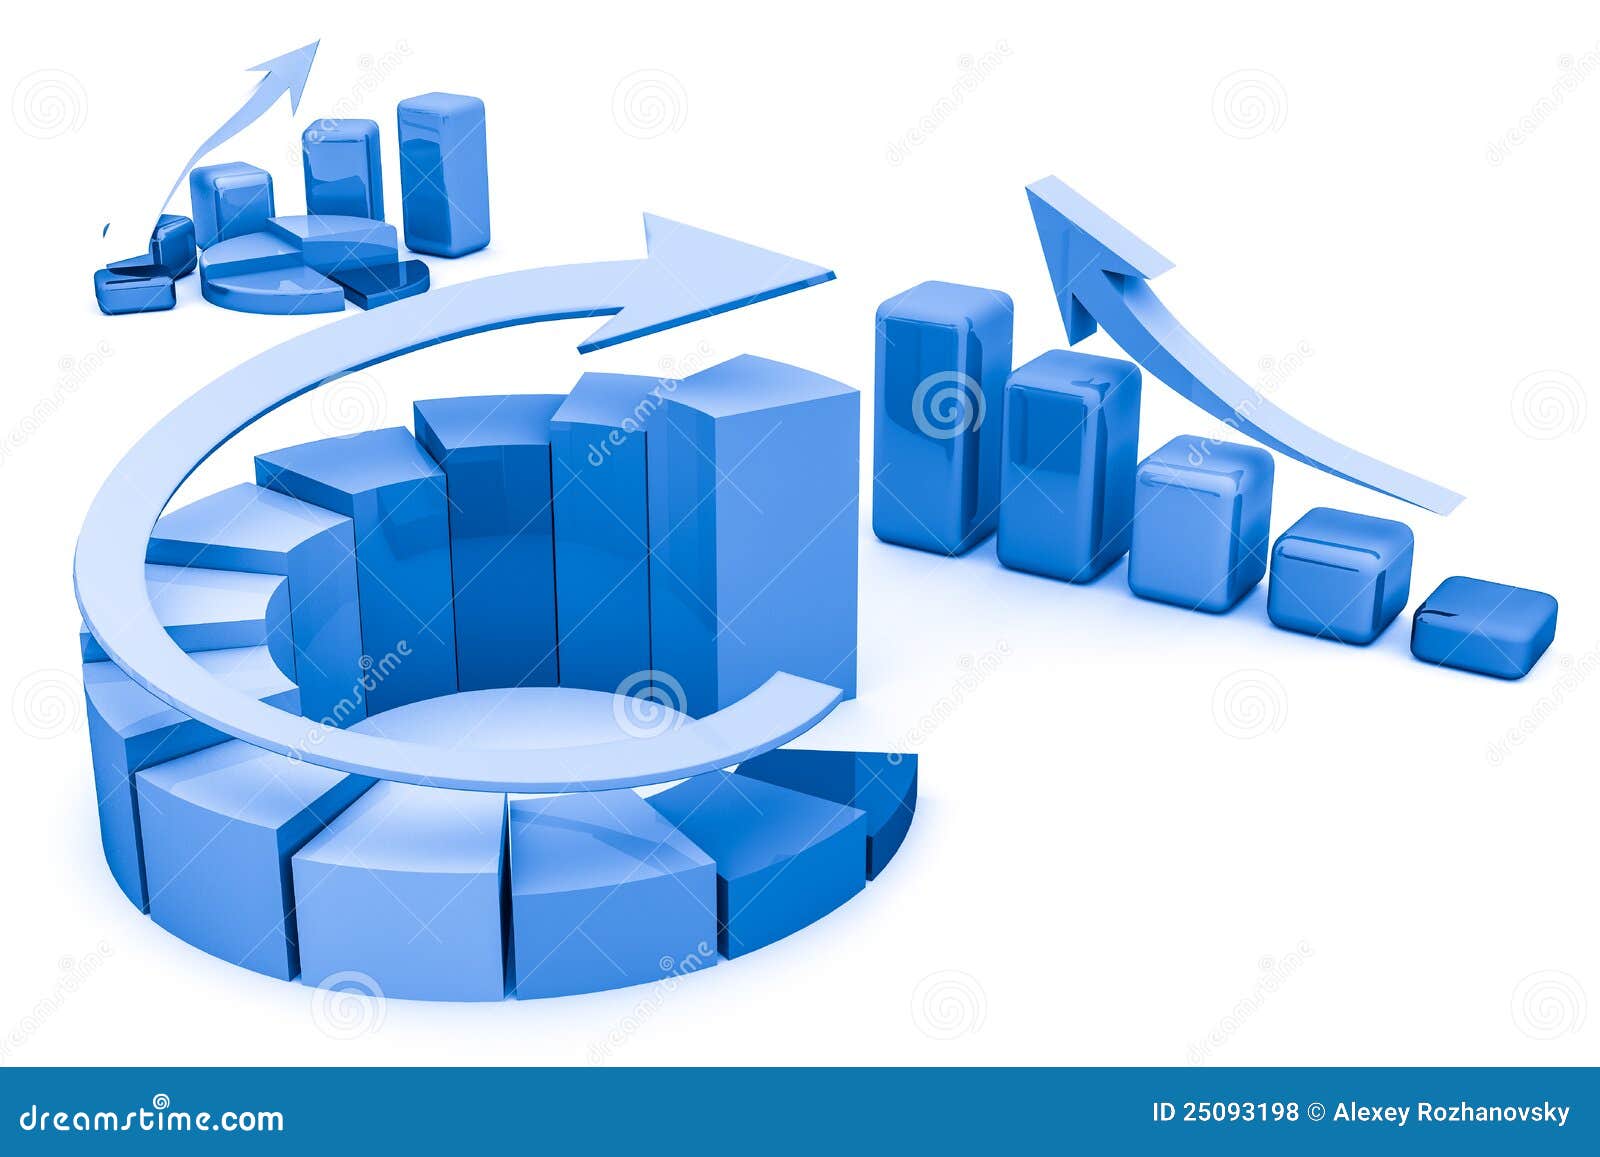 business-finance-chart-diagram-graphic-25093198.jpg